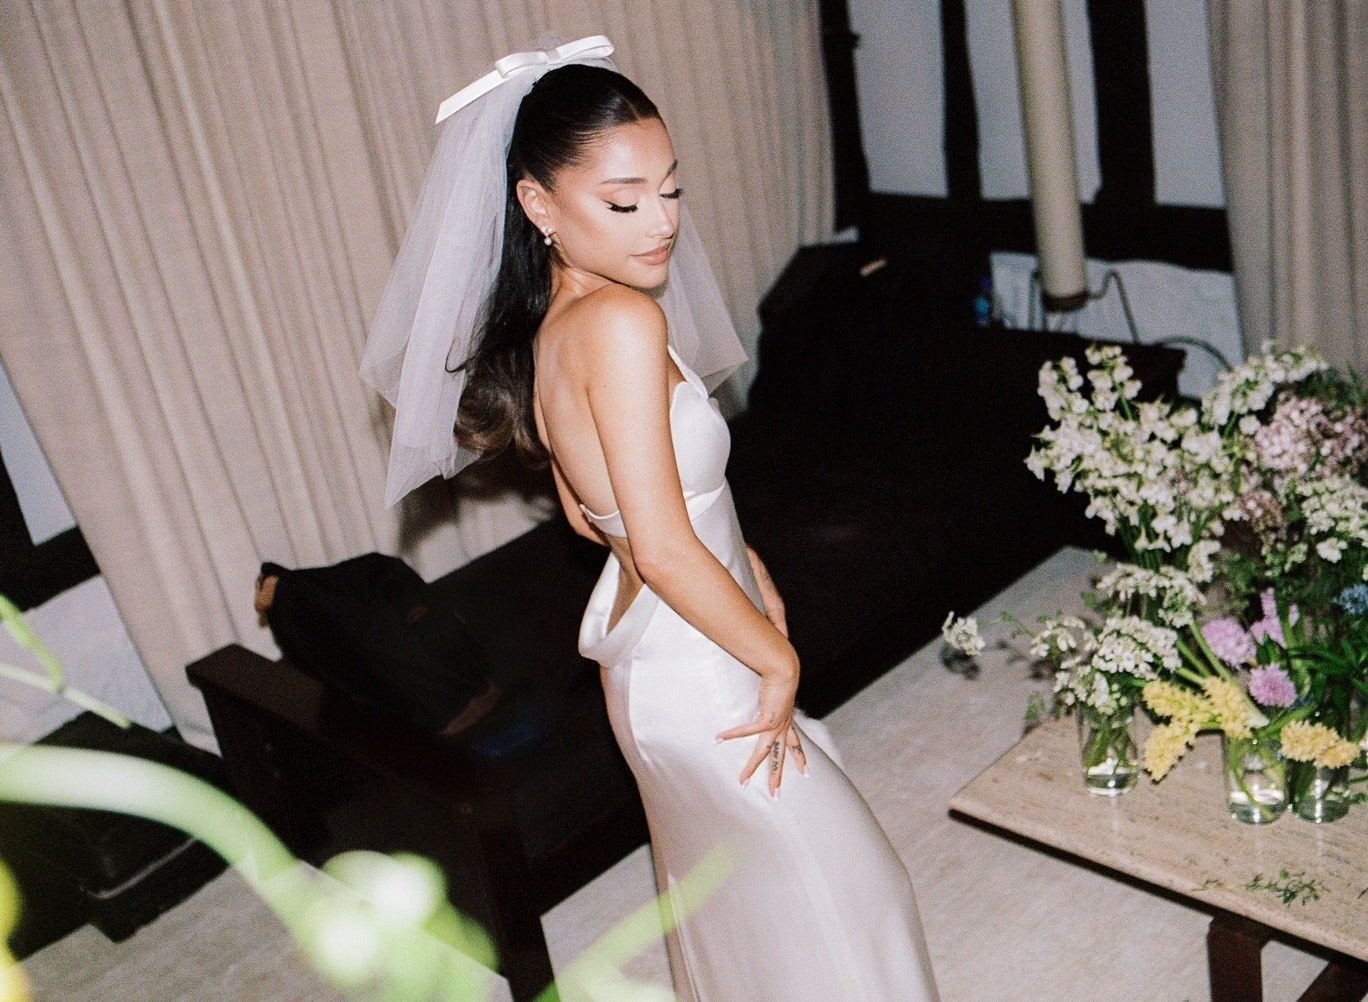 Explore pictures inside Ariana Grande’s wedding